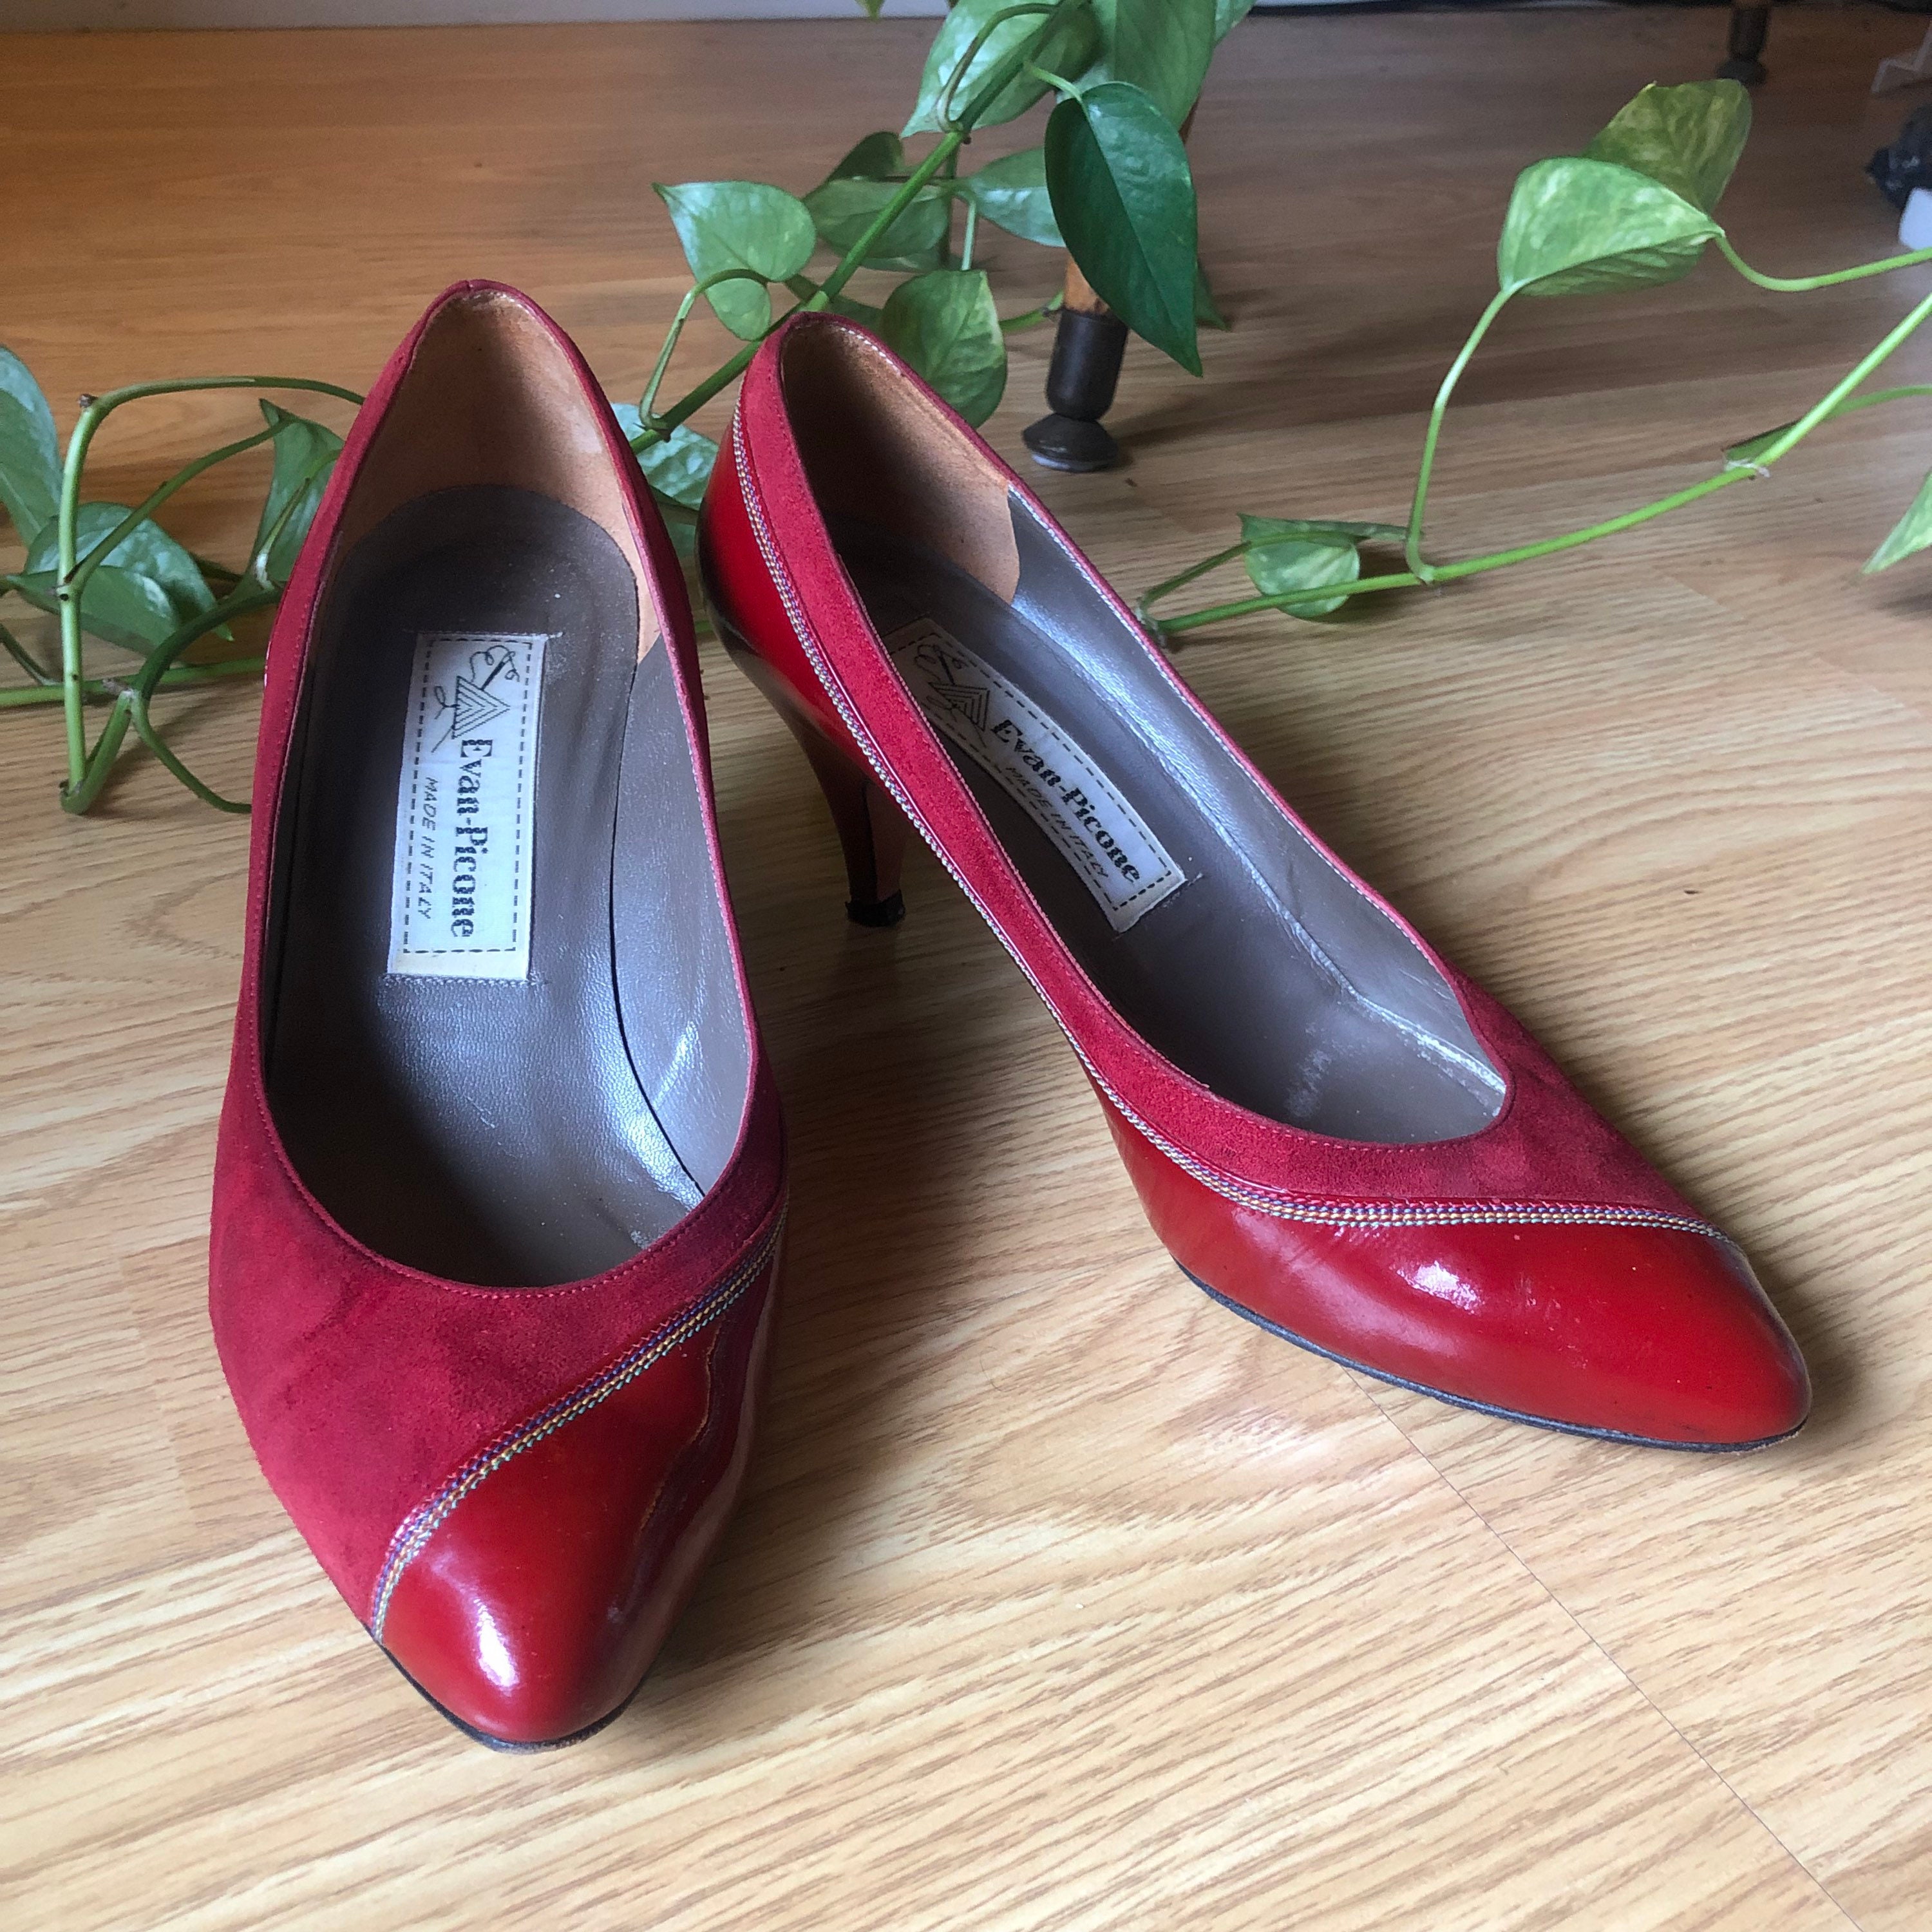 Schoenen damesschoenen Pumps Red leather studded pumps Vintage Evan Picone vintage red leather shoes 